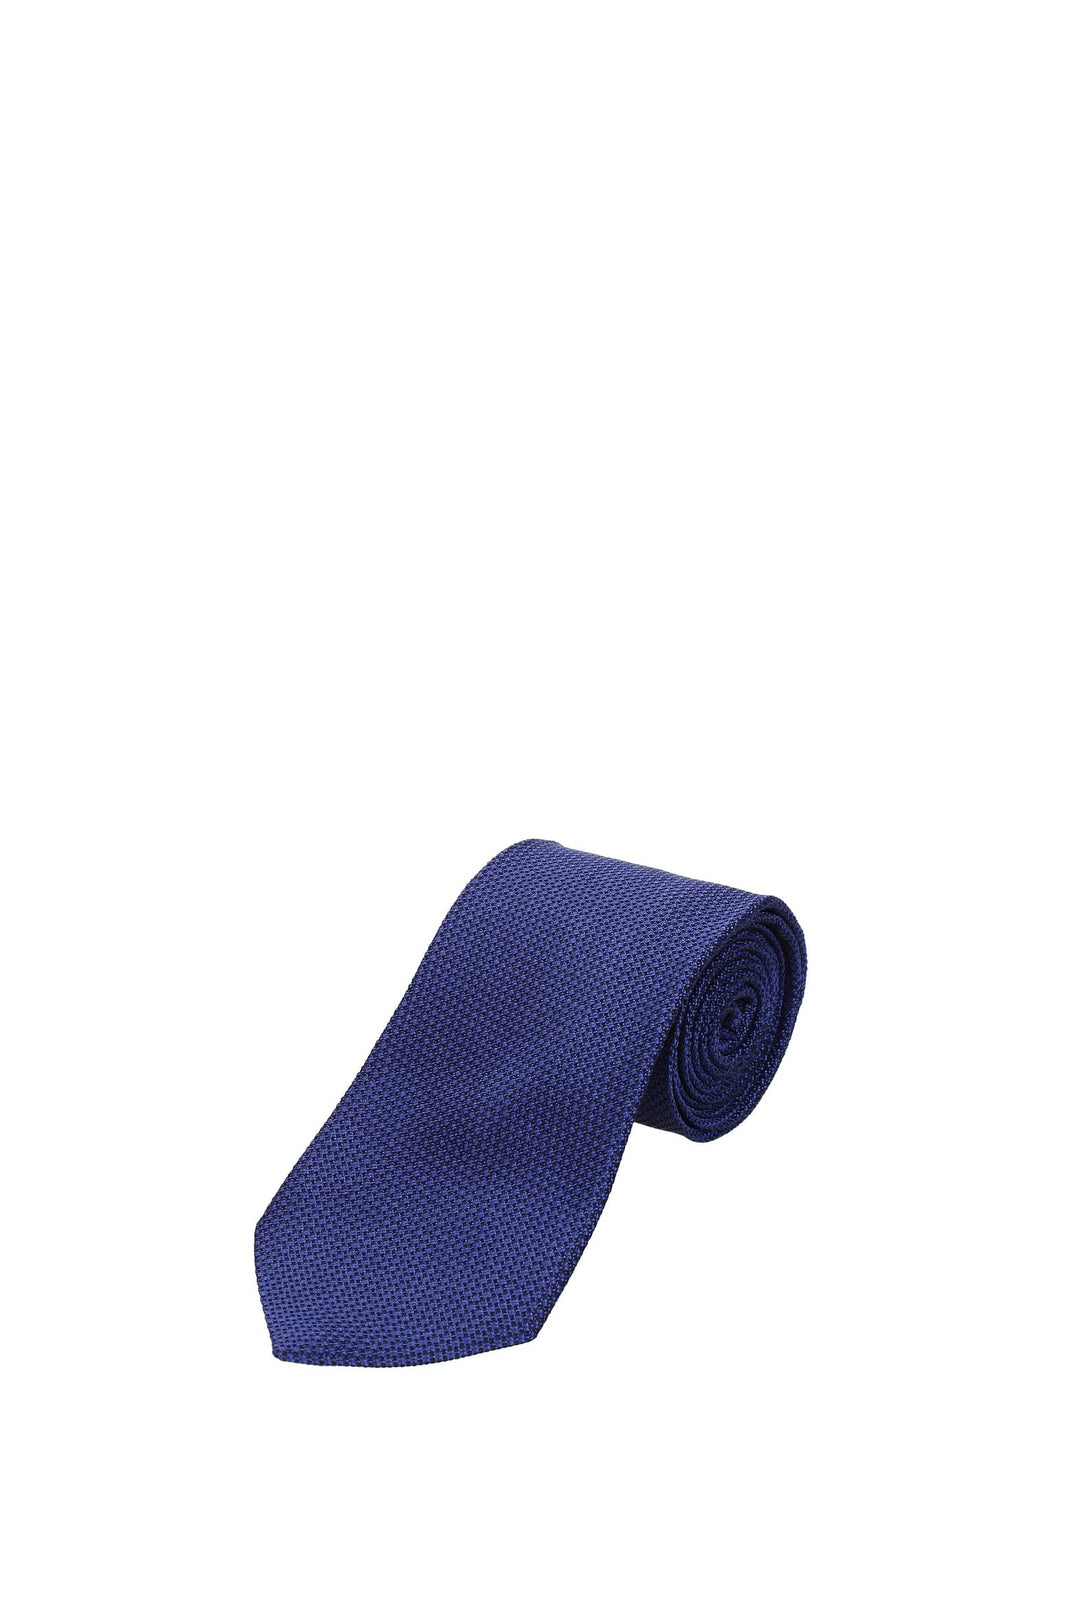 Cravatte Seta Blu Blu Royal - Zegna - Uomo